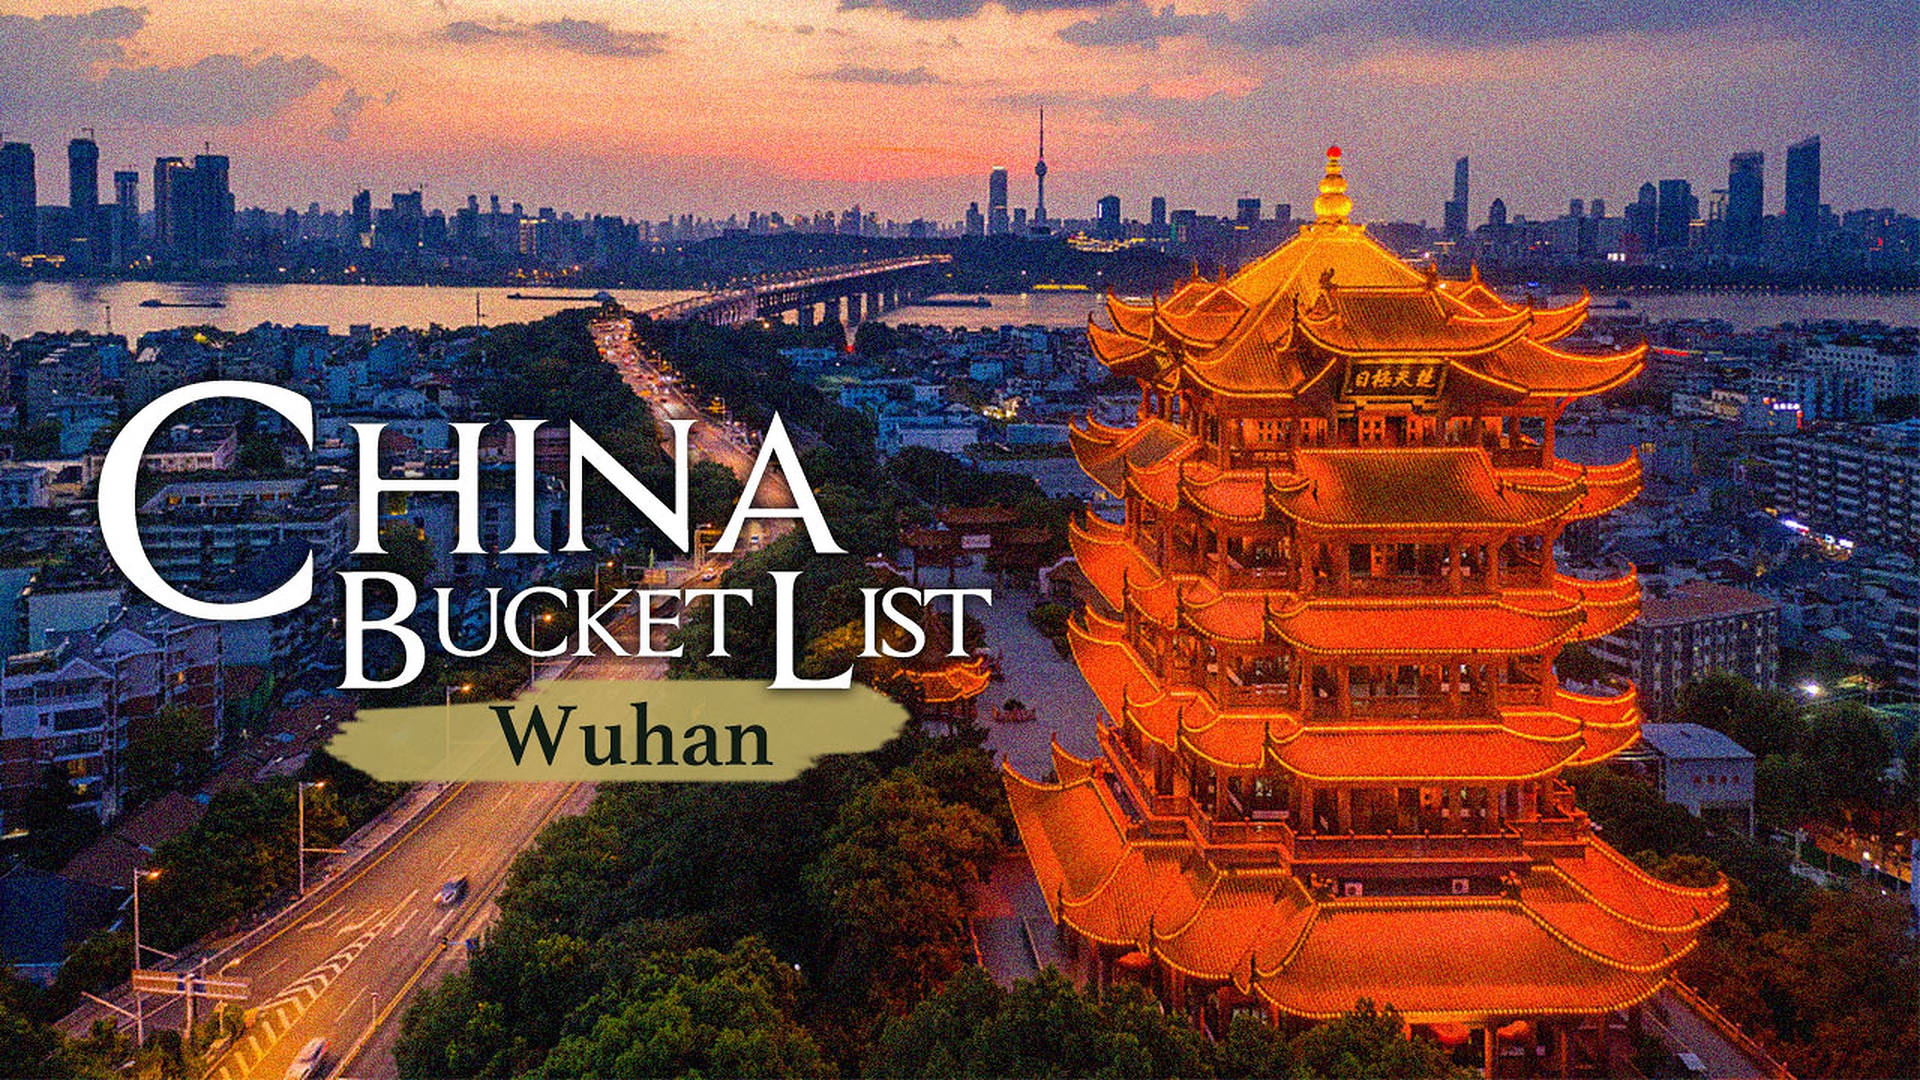 China Bucket List Wuhan Wallpaper